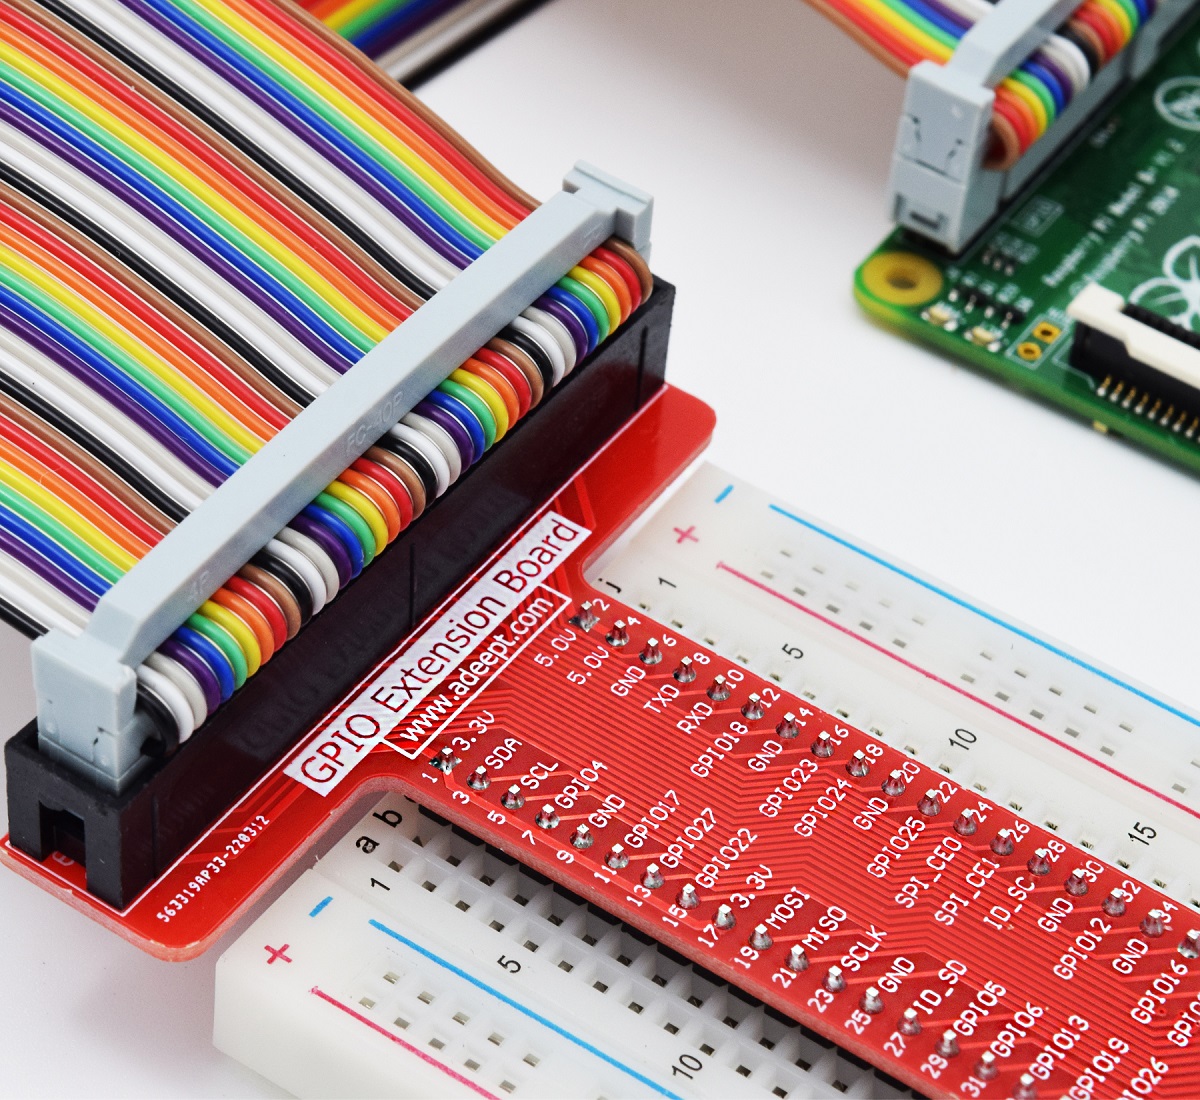  KEYESTUDIO GPIO Breakout Kit for Raspberry Pi - Assembled Pi  Breakout + Rainbow Ribbon Cable + 400 Tie Points Solderless Breadboard :  Electronics